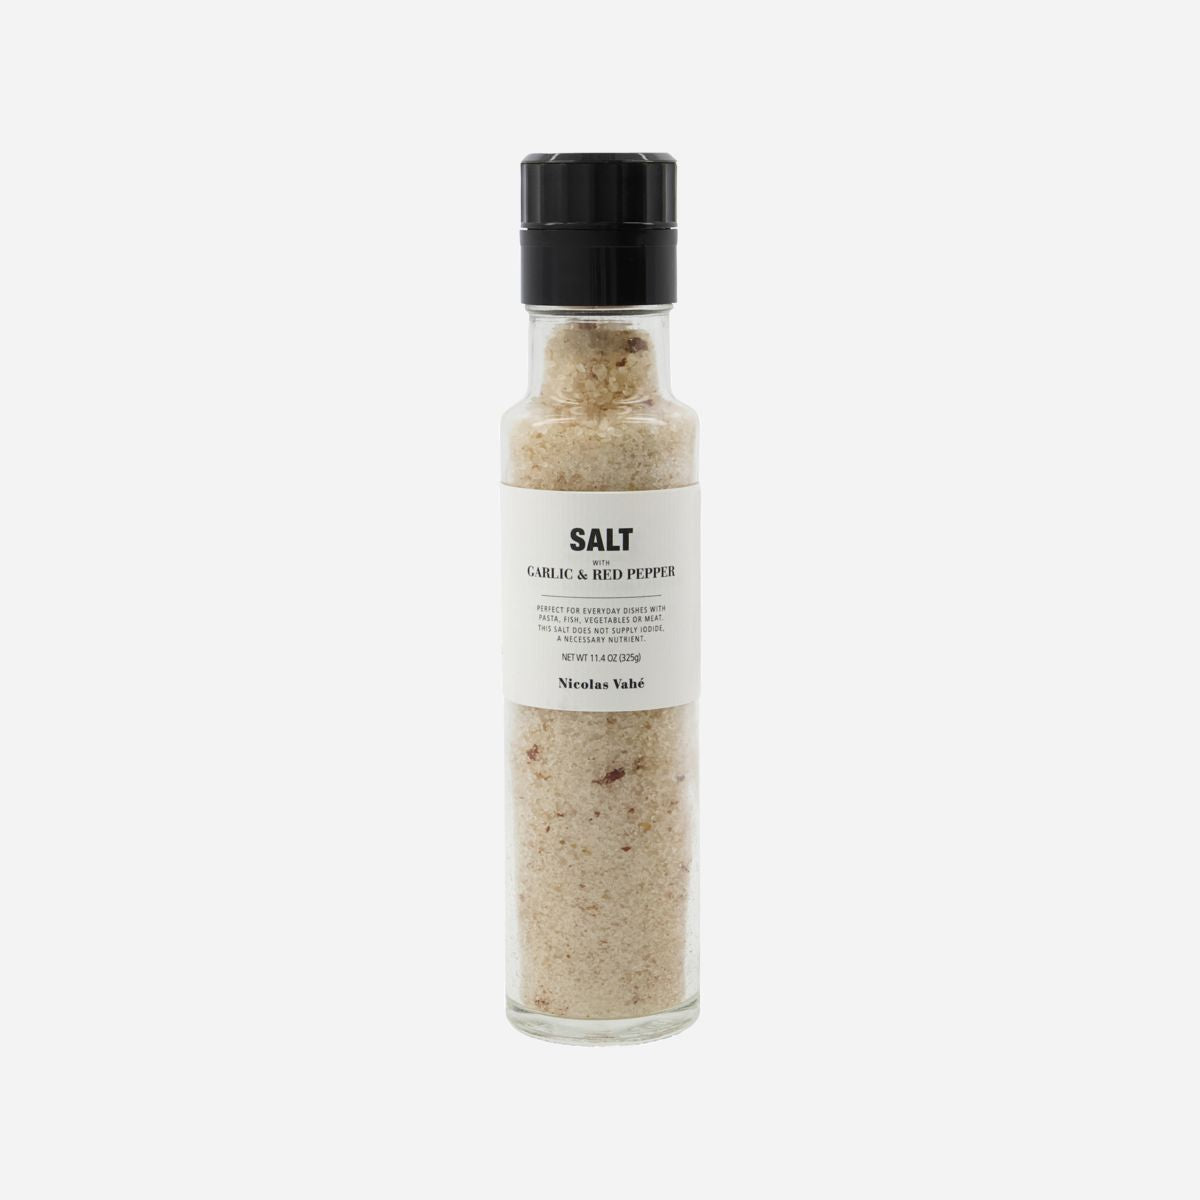 Nicolas Vahé Salt, Garlic + Red Pepper by Society of Lifestyle